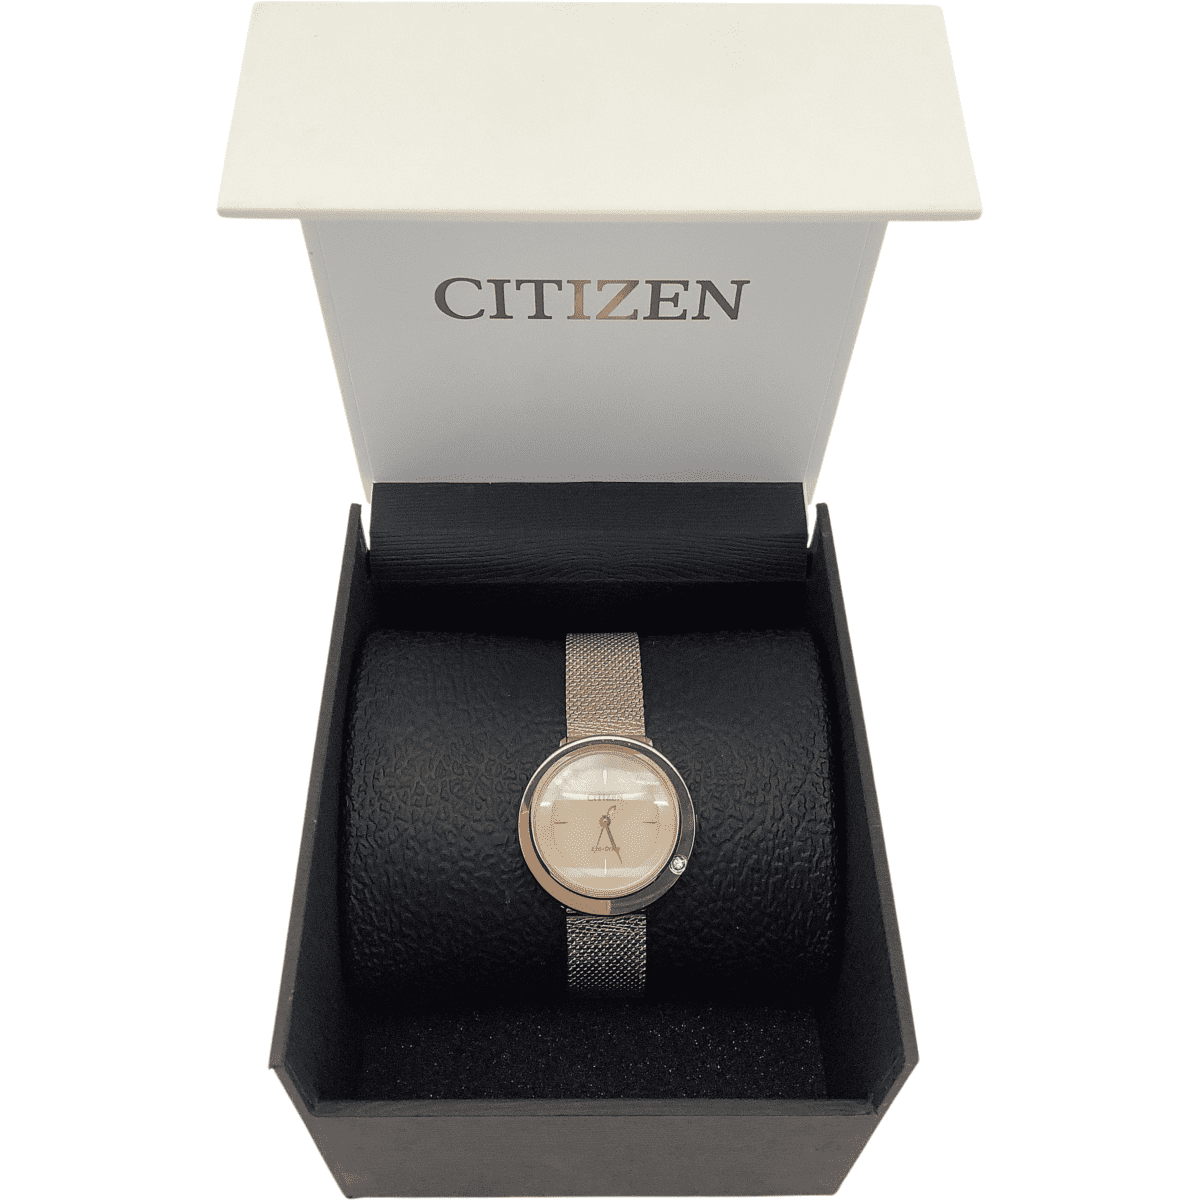 Citizen Women's Analog Wrist Watch / Rose Gold / Diamond Patterned Bracelet / Women's Accessories